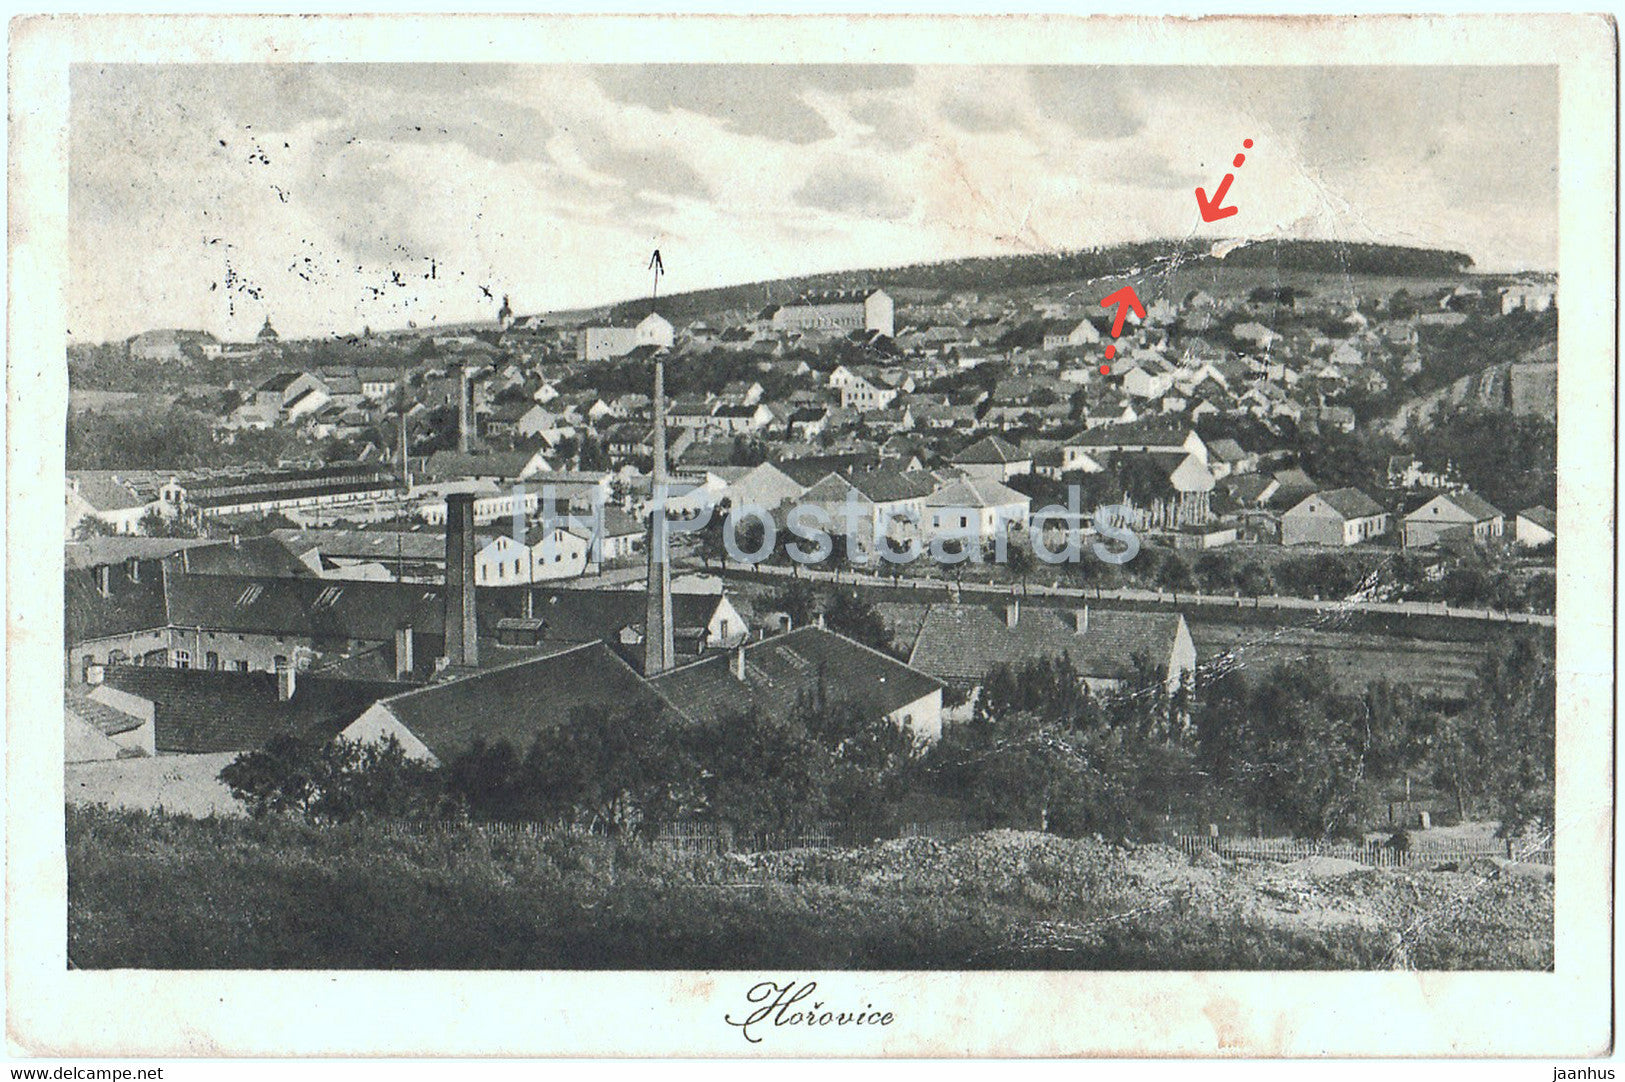 Horovice - old postcard - 1936 - Czech Republic - Czechoslovakia - used - JH Postcards